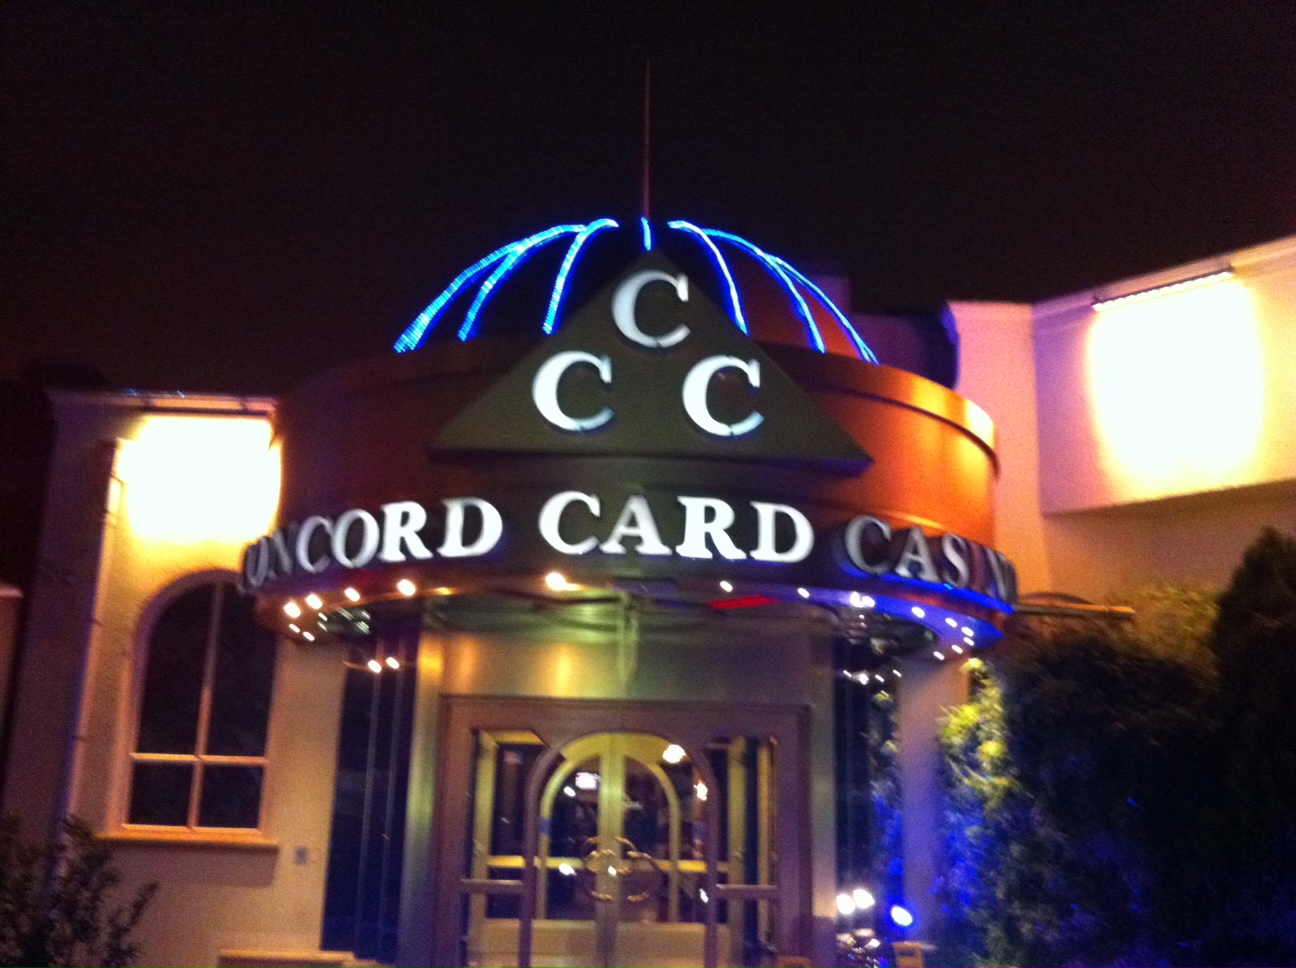 CCC Concord Card Casino Wien